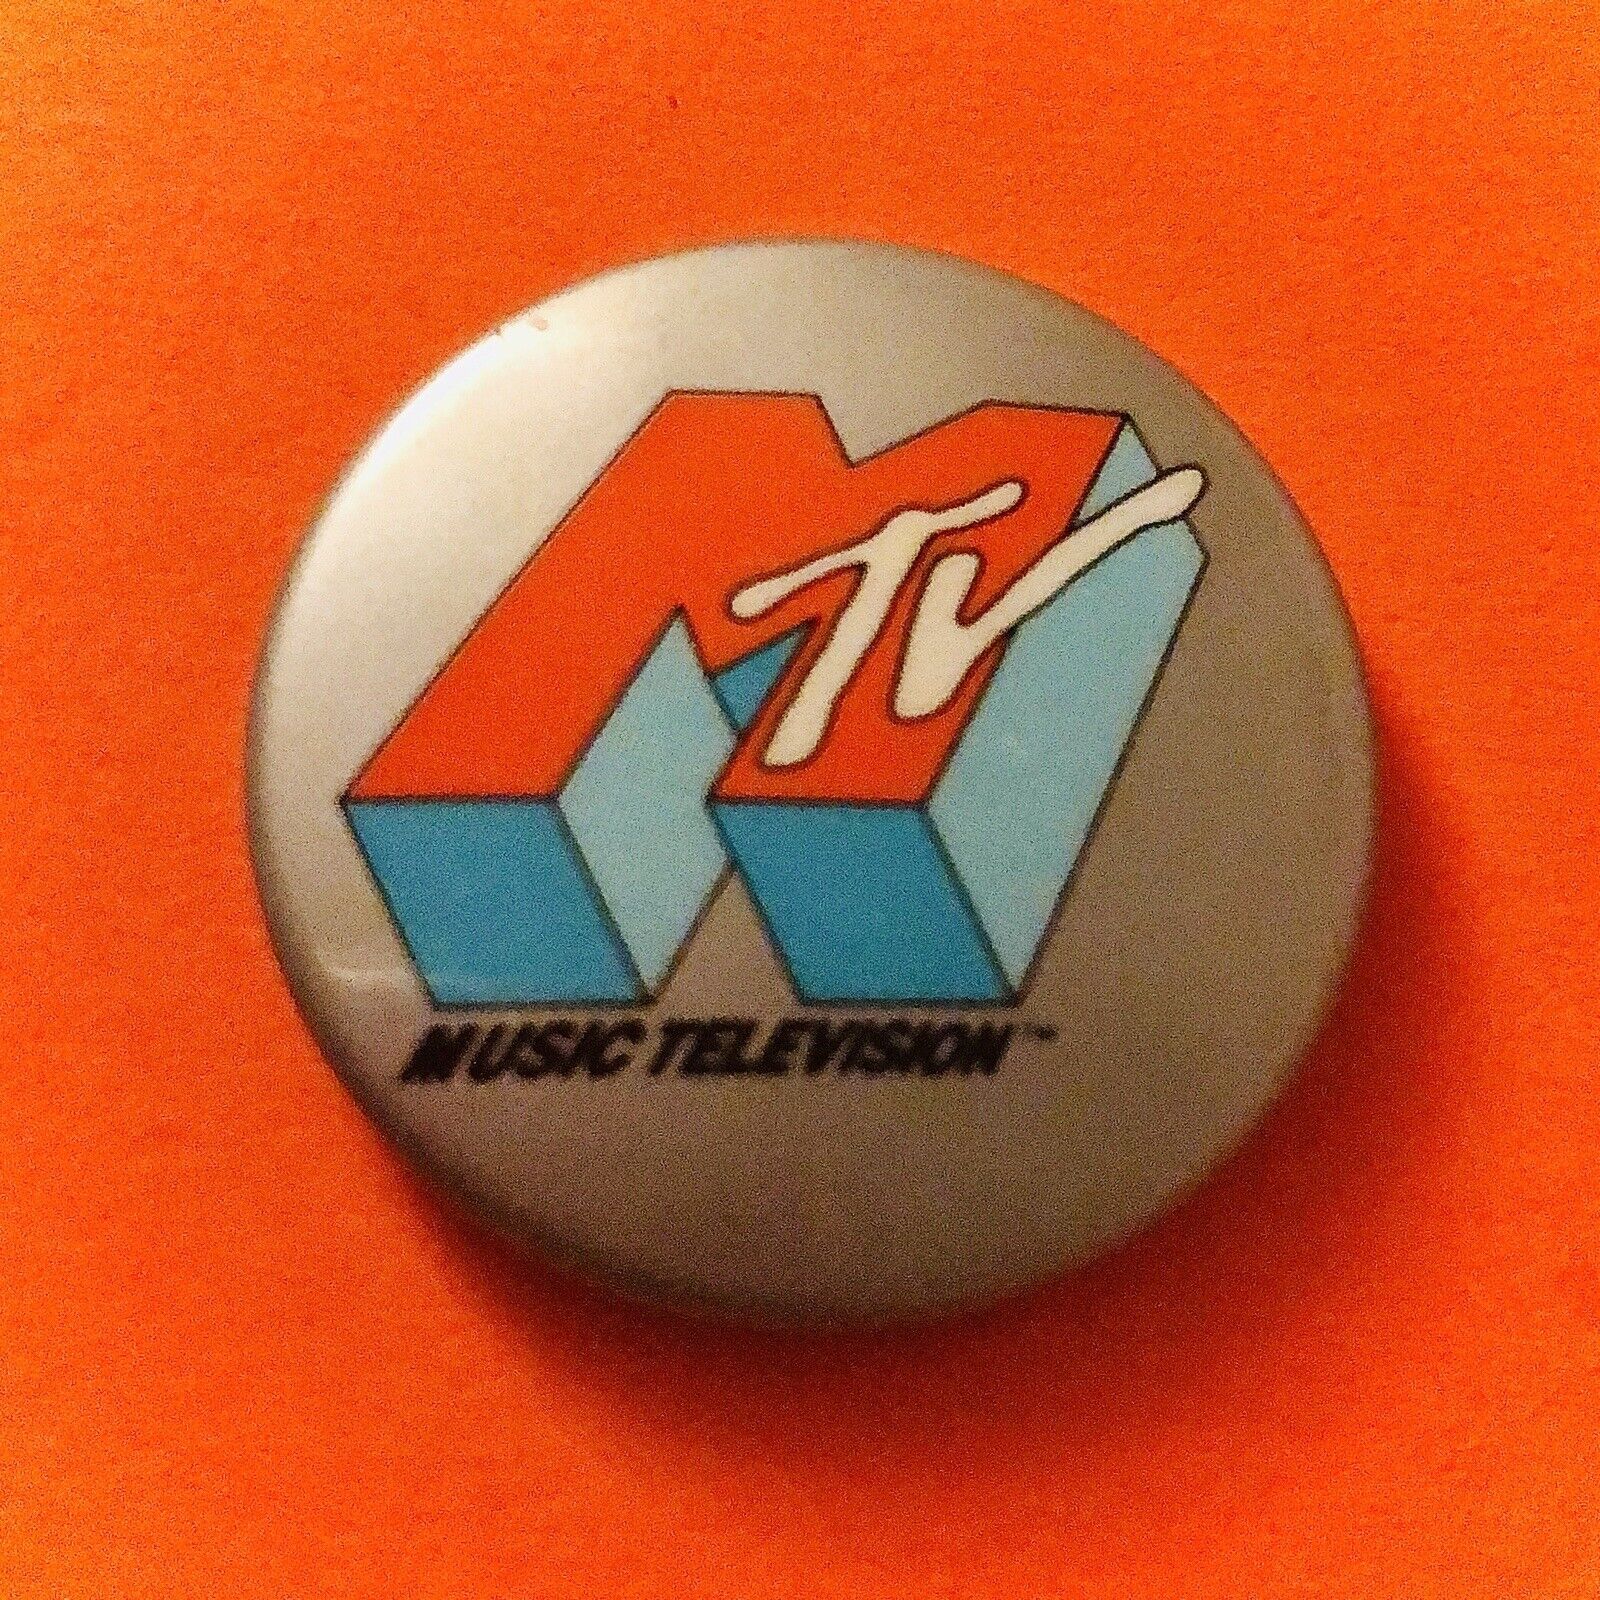 MTV Pin Vintage 1980s Authentic 80s Original 1986 MTV pin Pinback button Badge